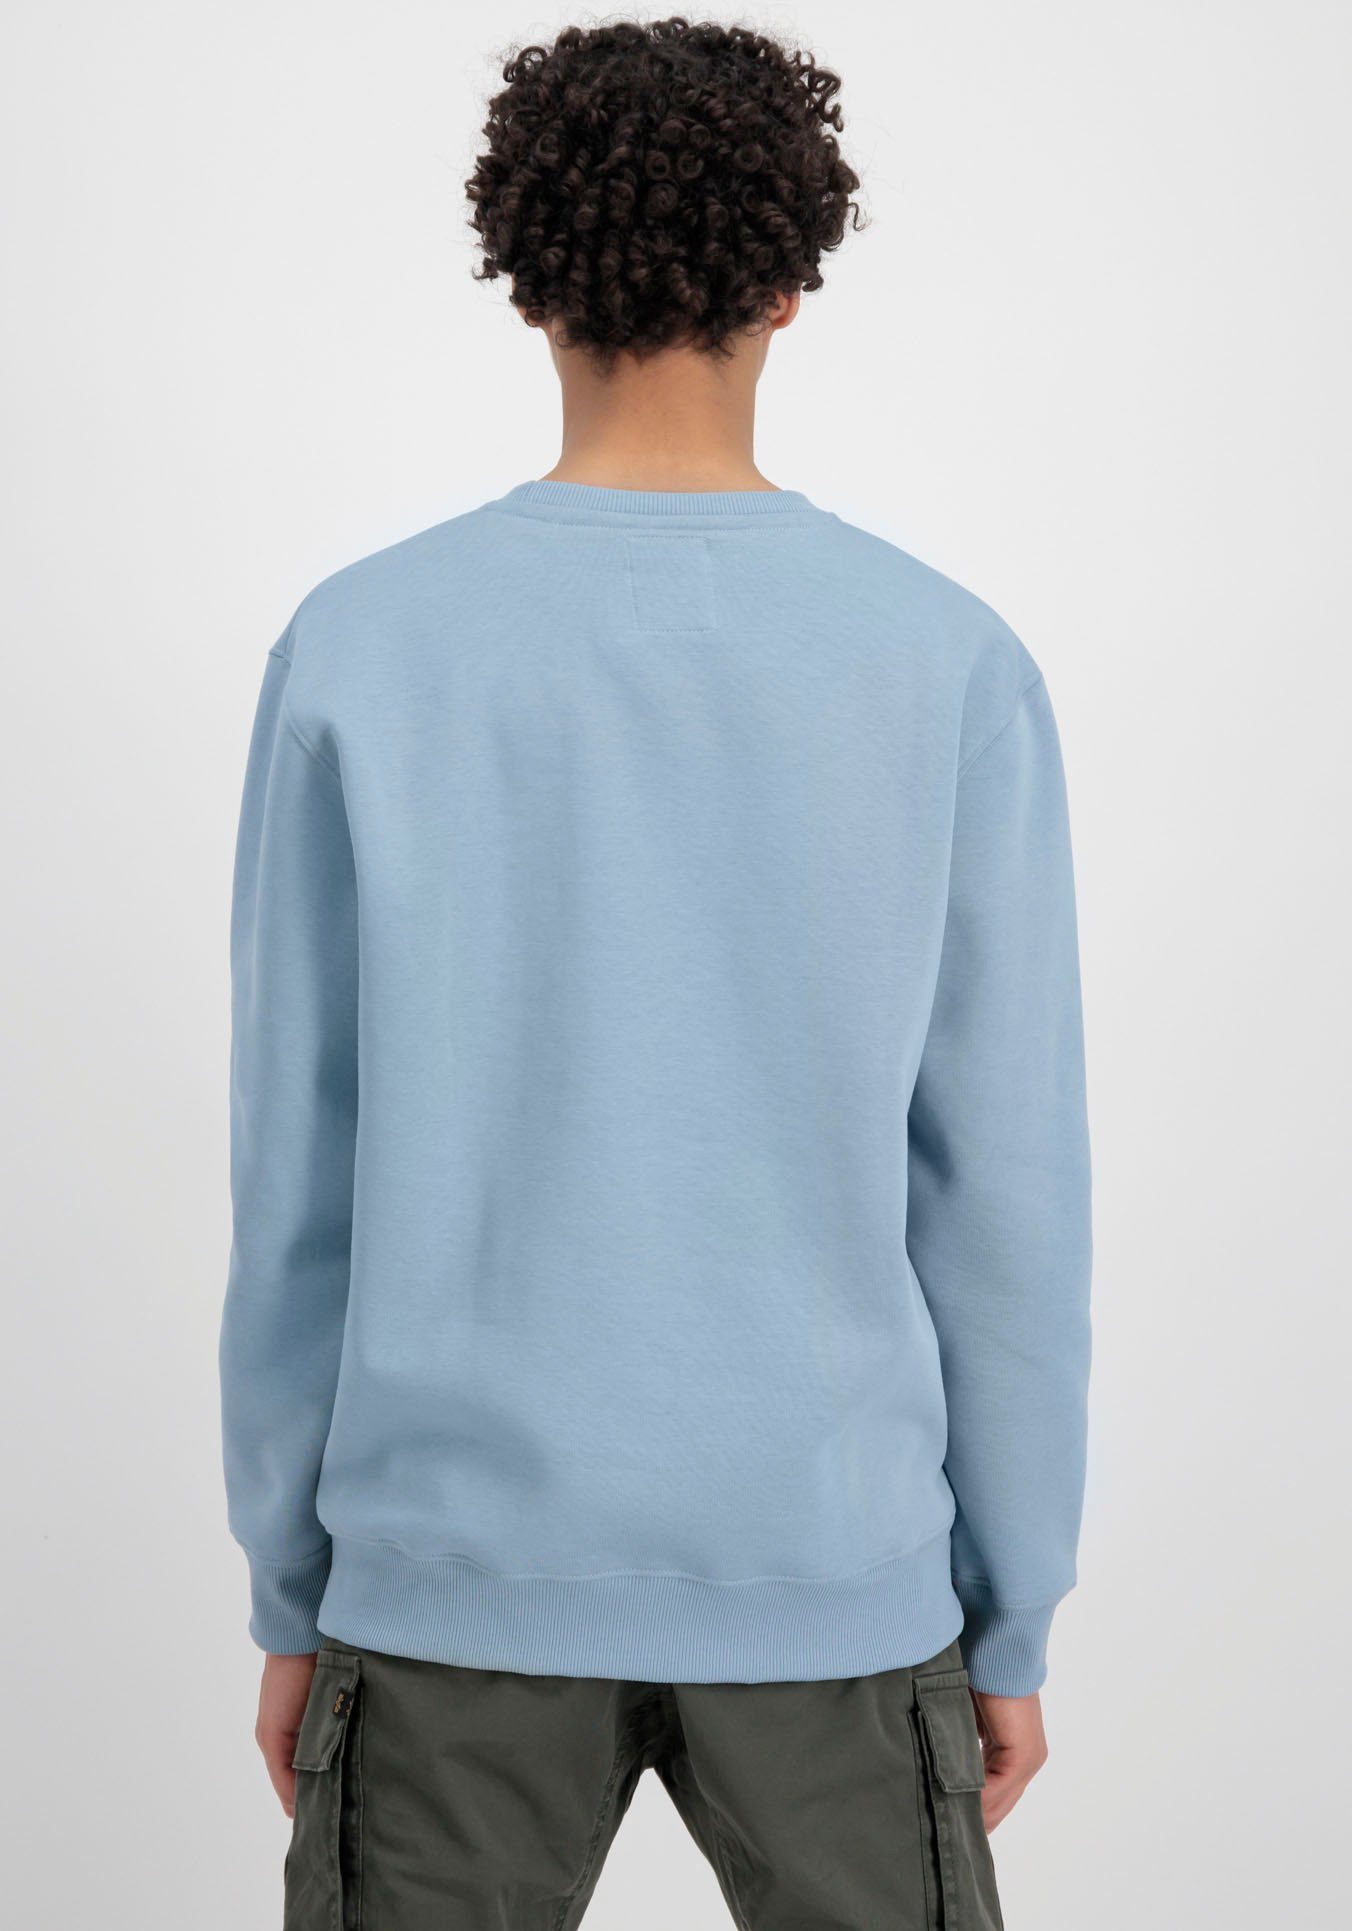 Basic greyblue Alpha Sweatshirt Sweater Industries